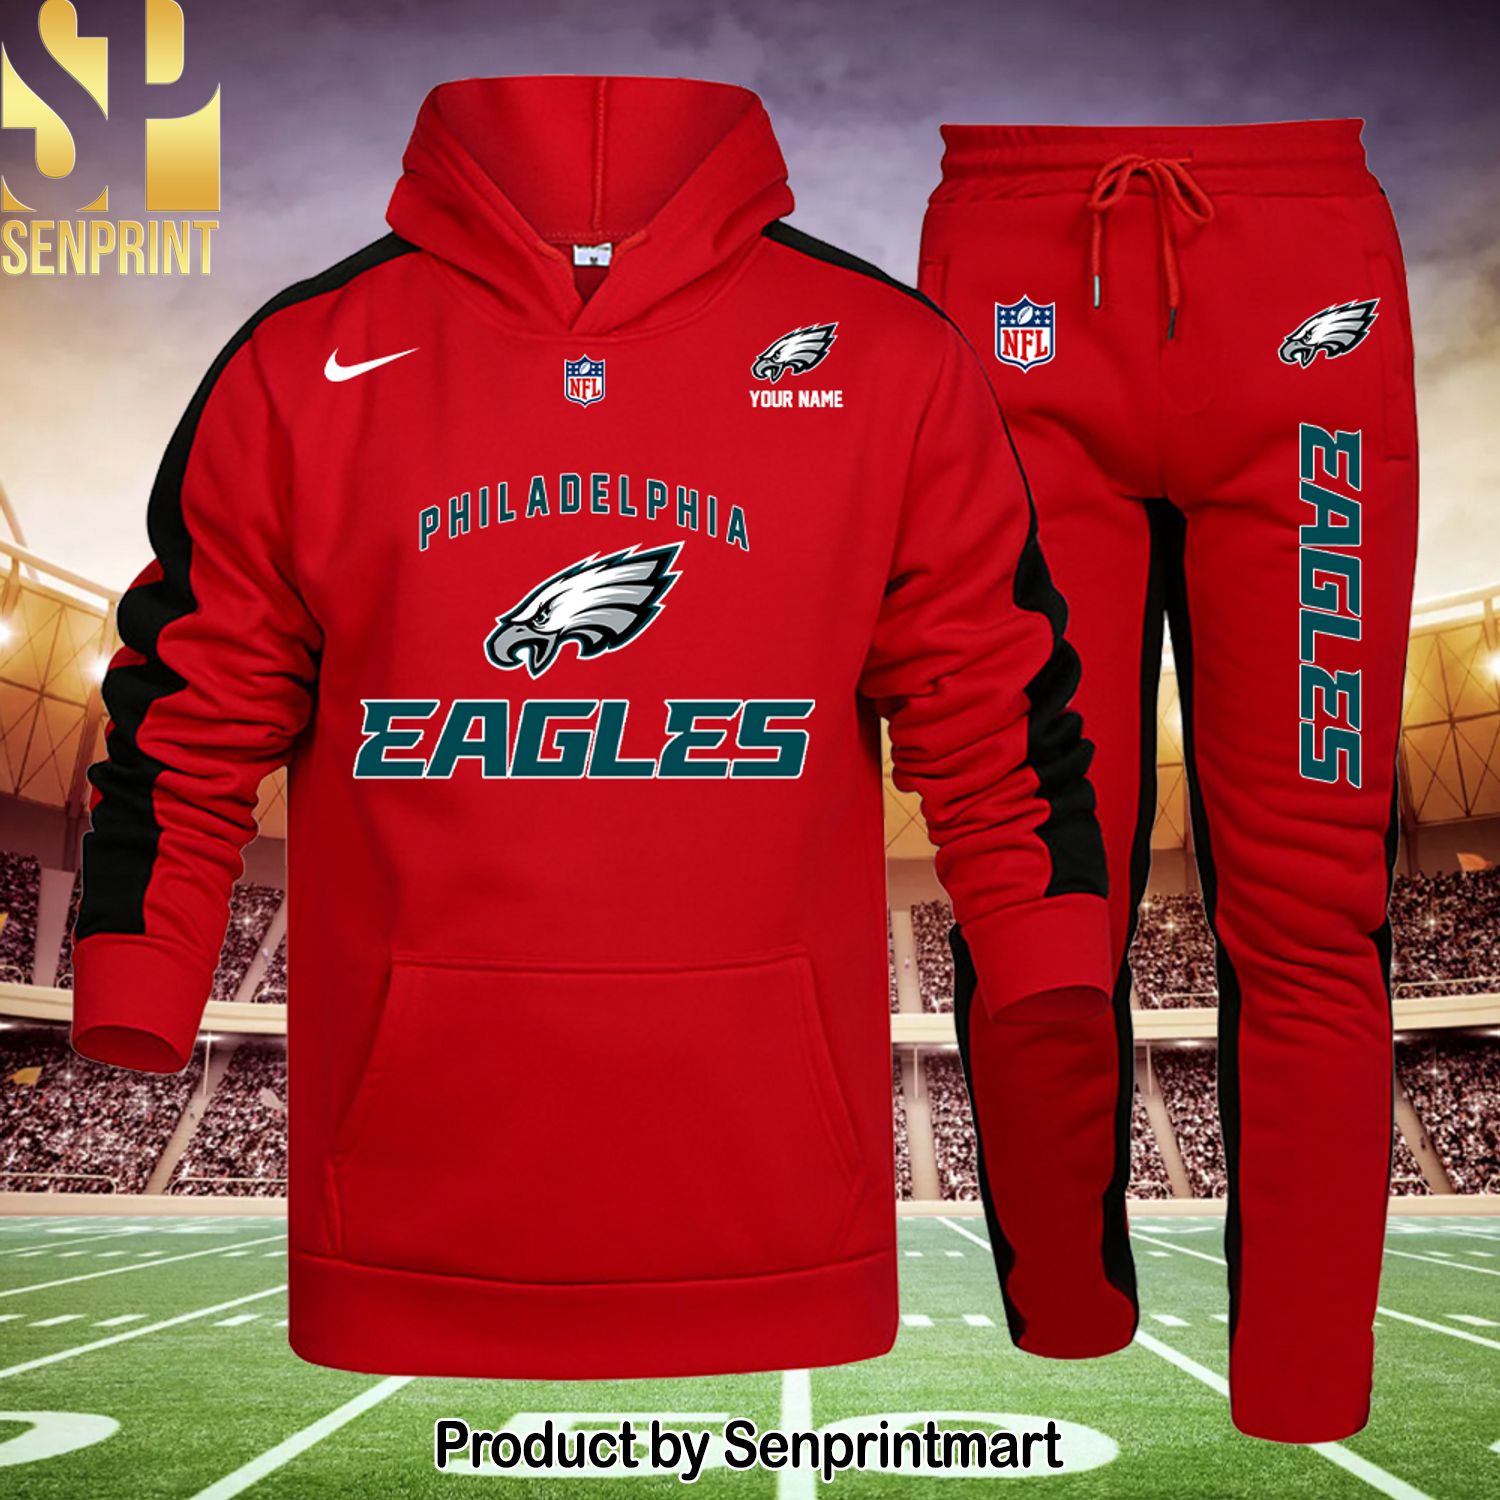 Philadelphia Eagles Unisex Shirt and Pants